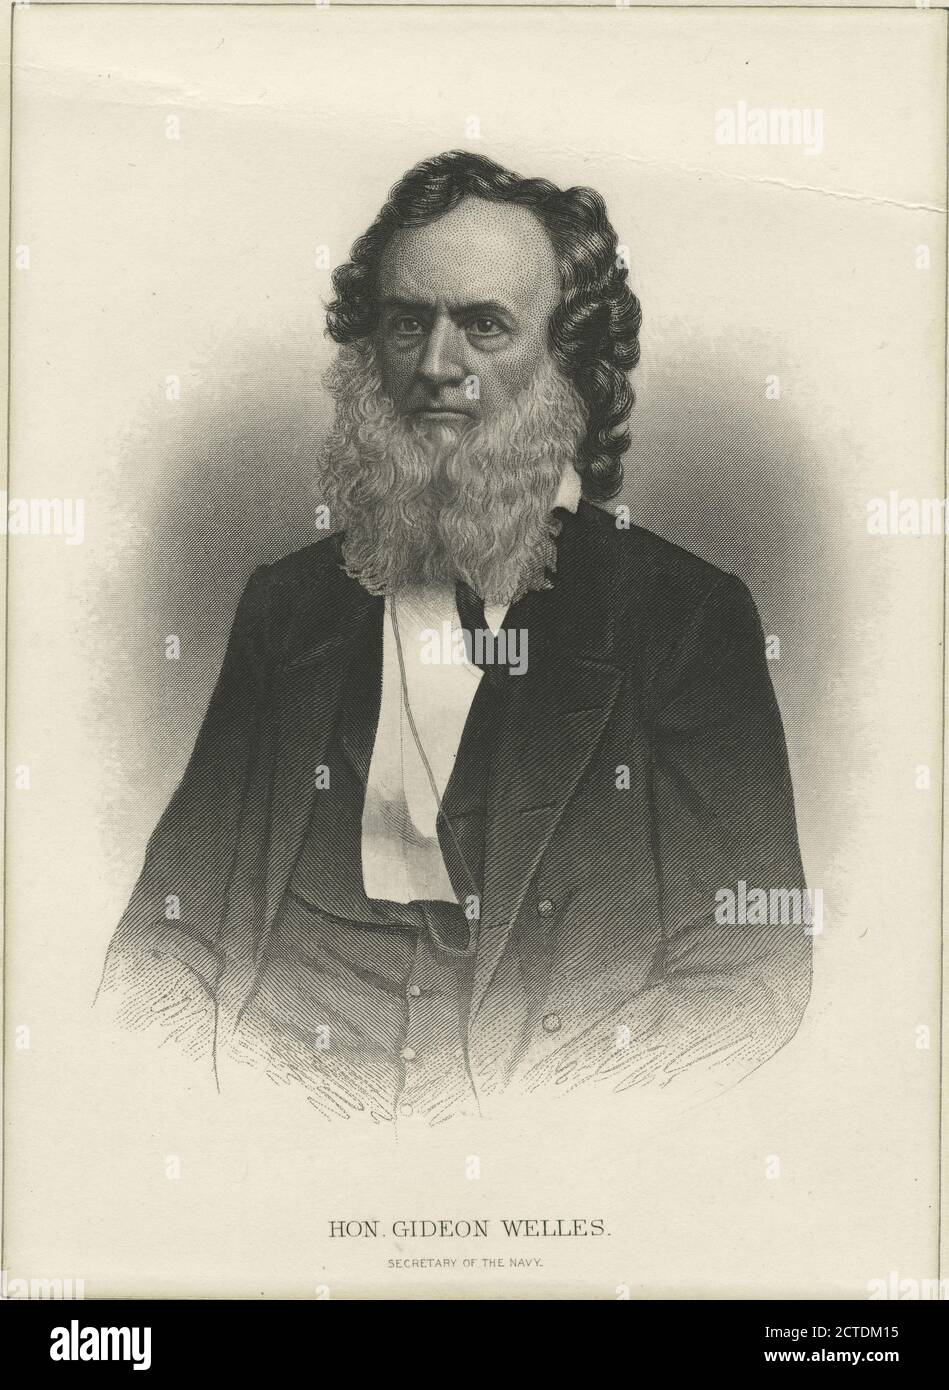 Hon. Gideon Welles Sekretär der Marine., Standbild, Drucke, 1861 - 1880 Stockfoto